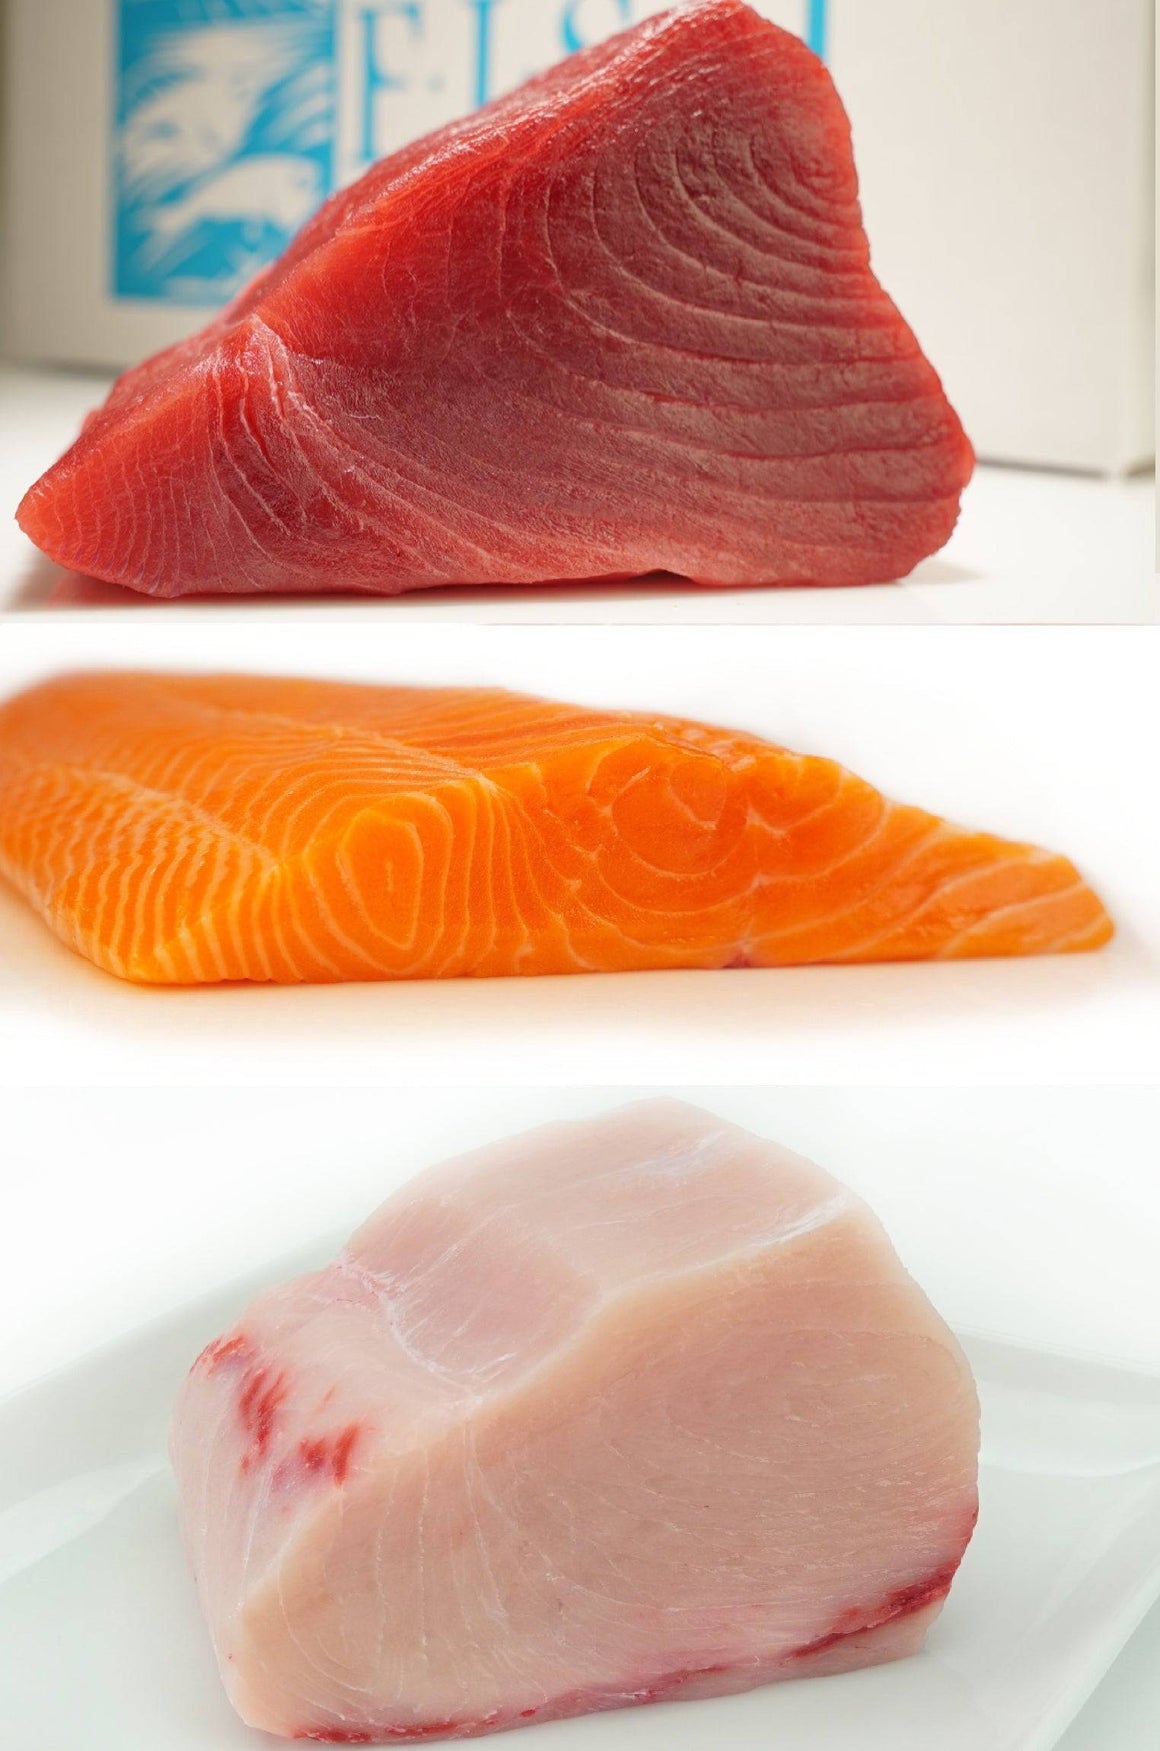 Ultra Ahi Swordfish And King Salmon 6 lbs - Honolulu Fish